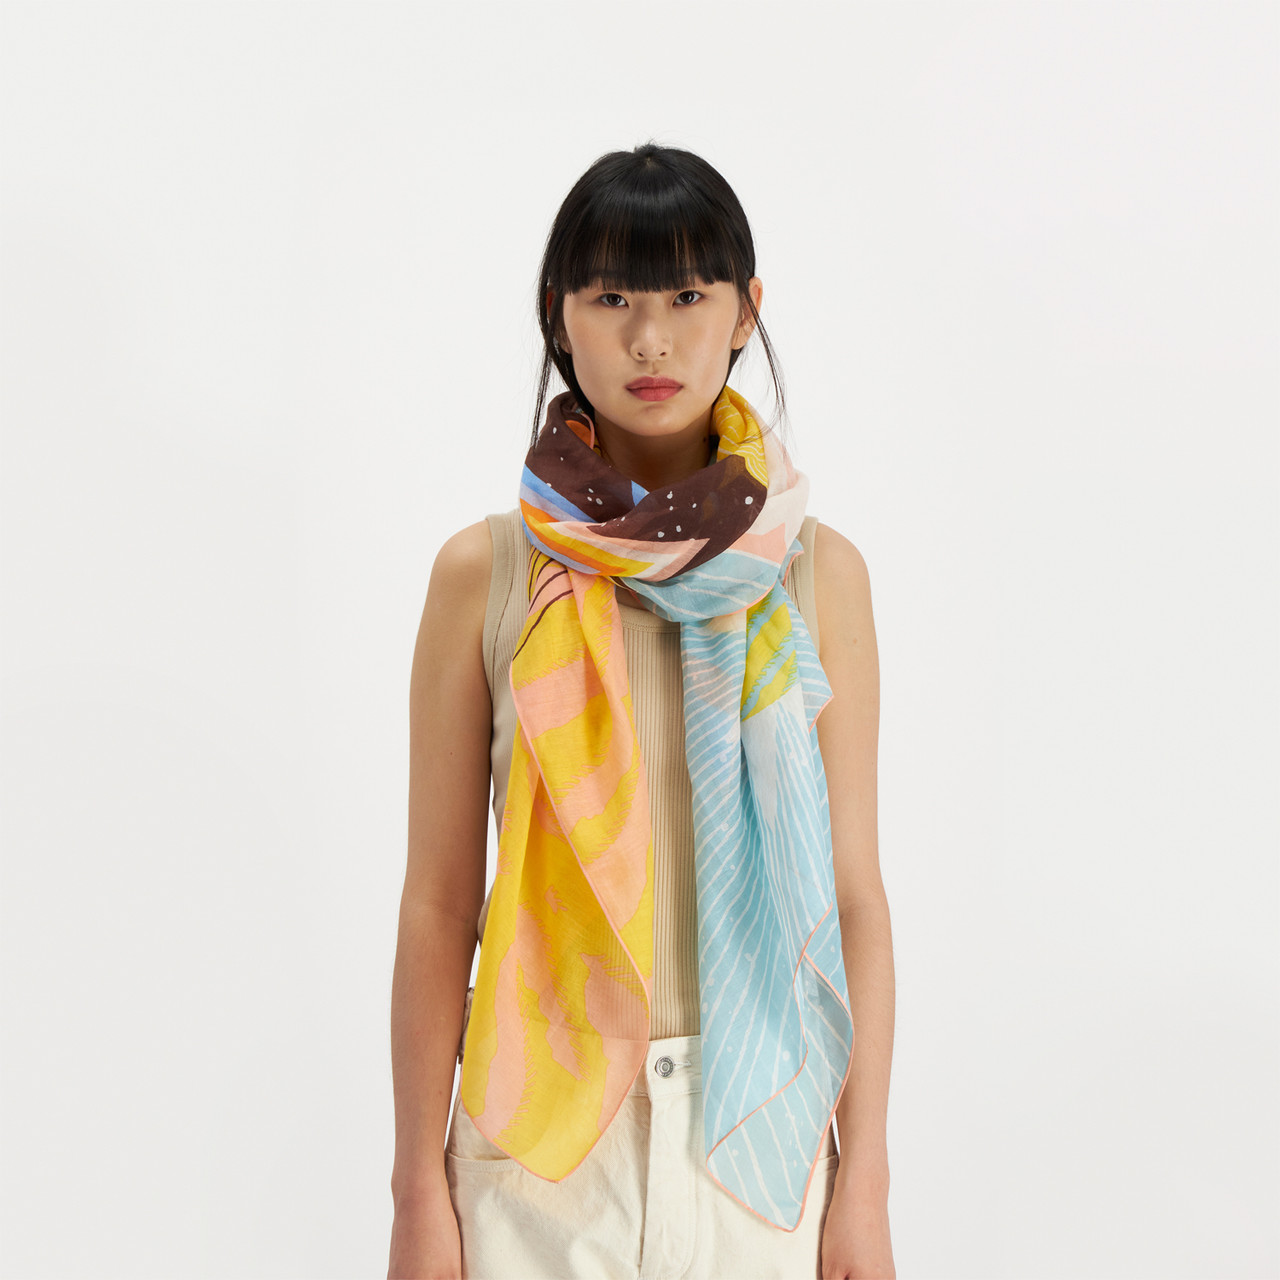 Boom Silk & Cotton Scarf in Pastel, Inoui Editions, tomfoolery